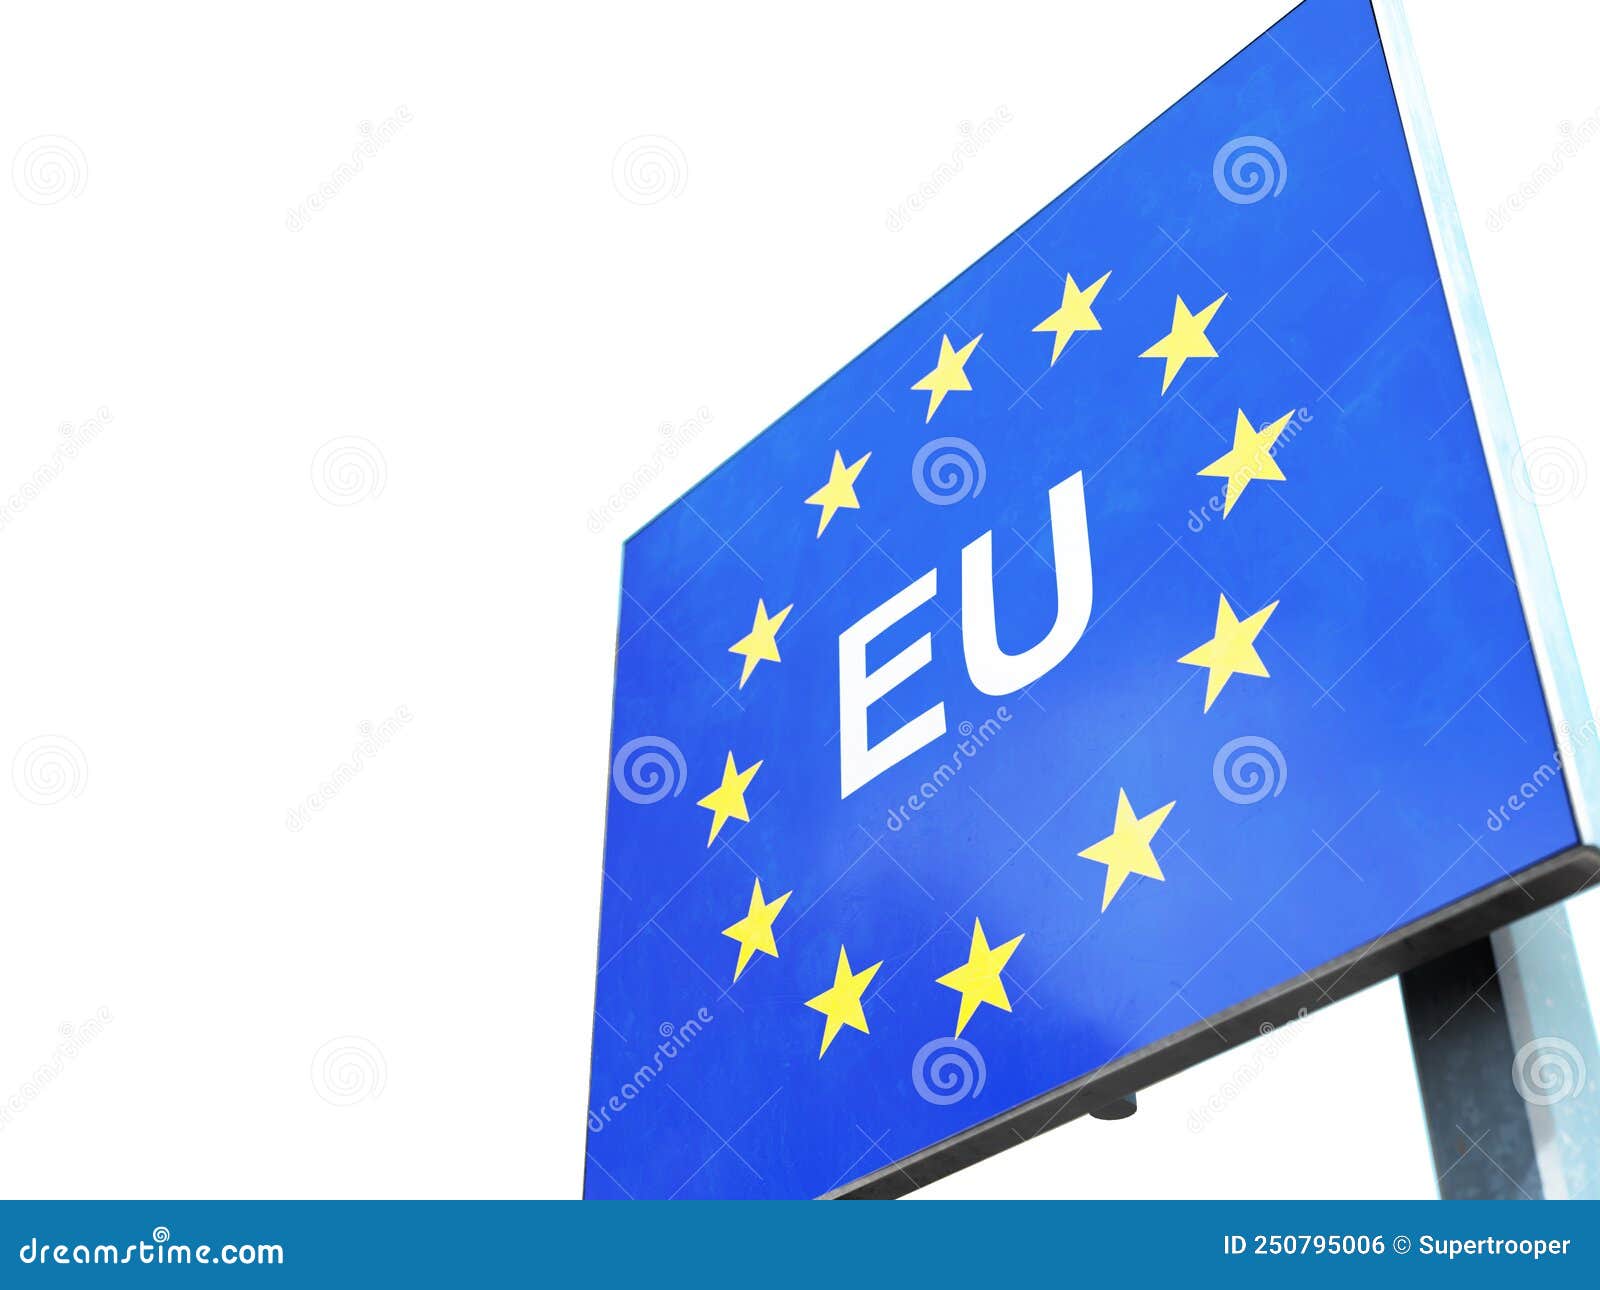 border sign of europeÃÂ european union flag and eu border